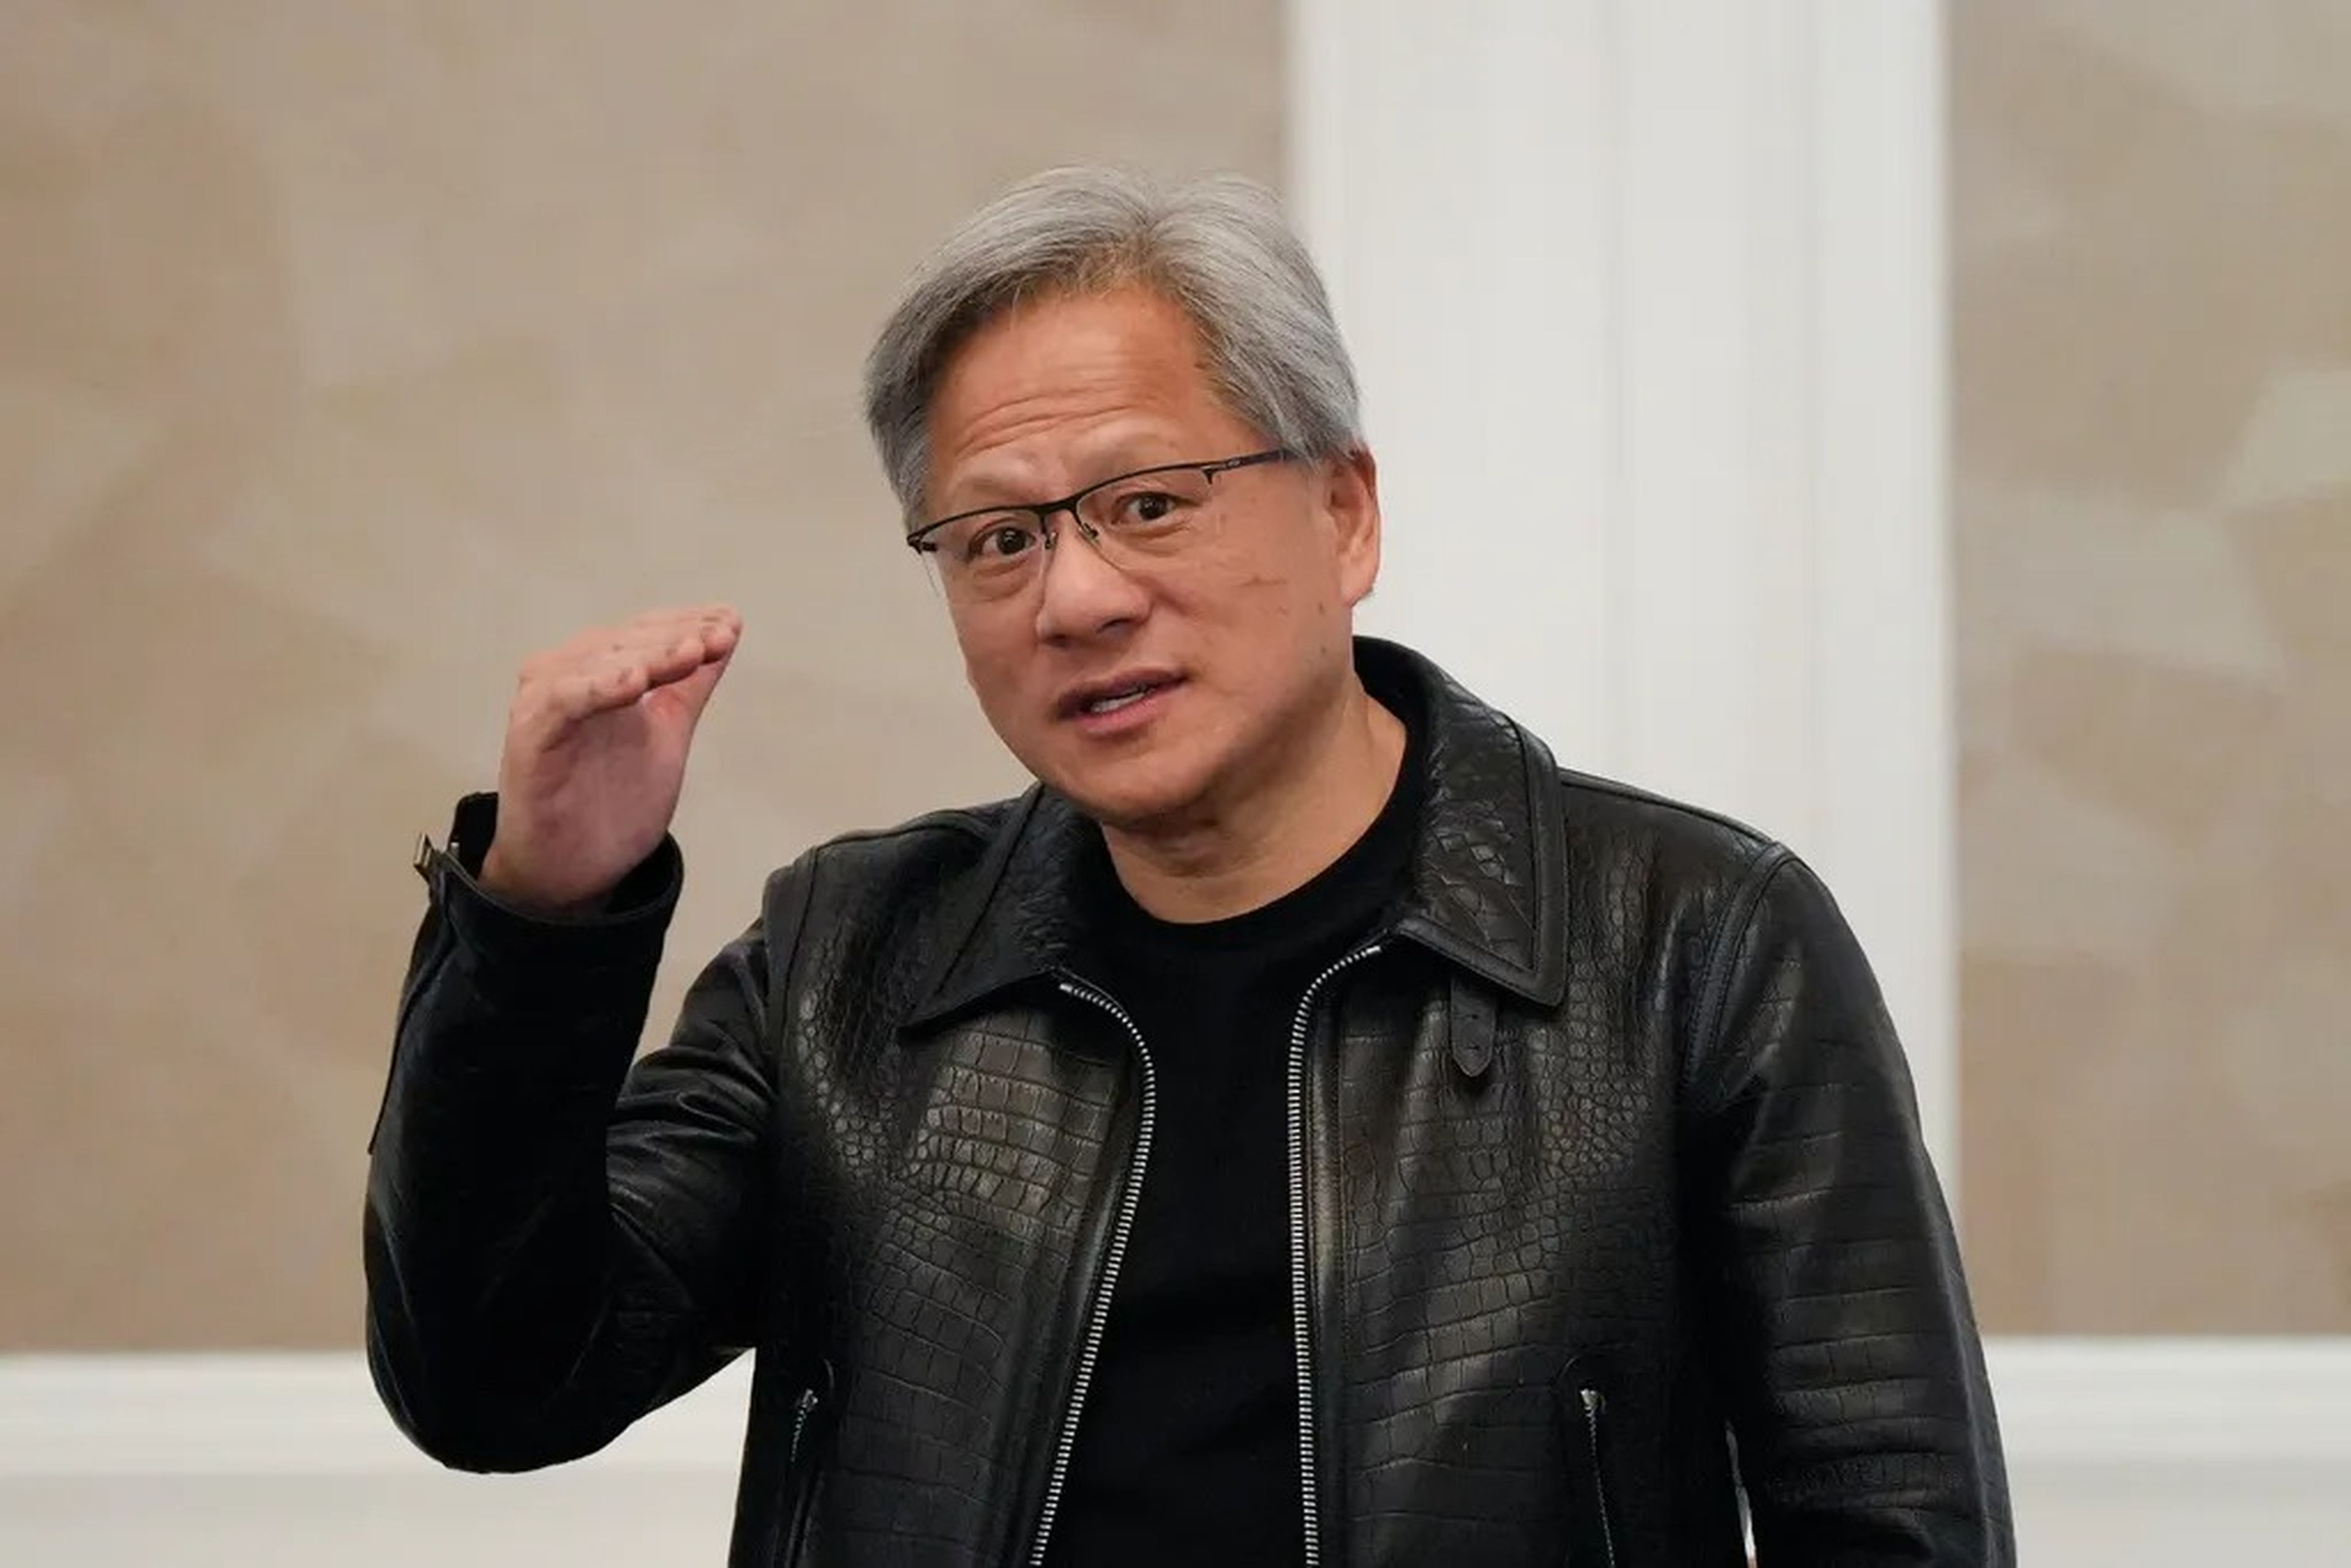 Jensen Huang, CEO y cofundador de Nvidia.